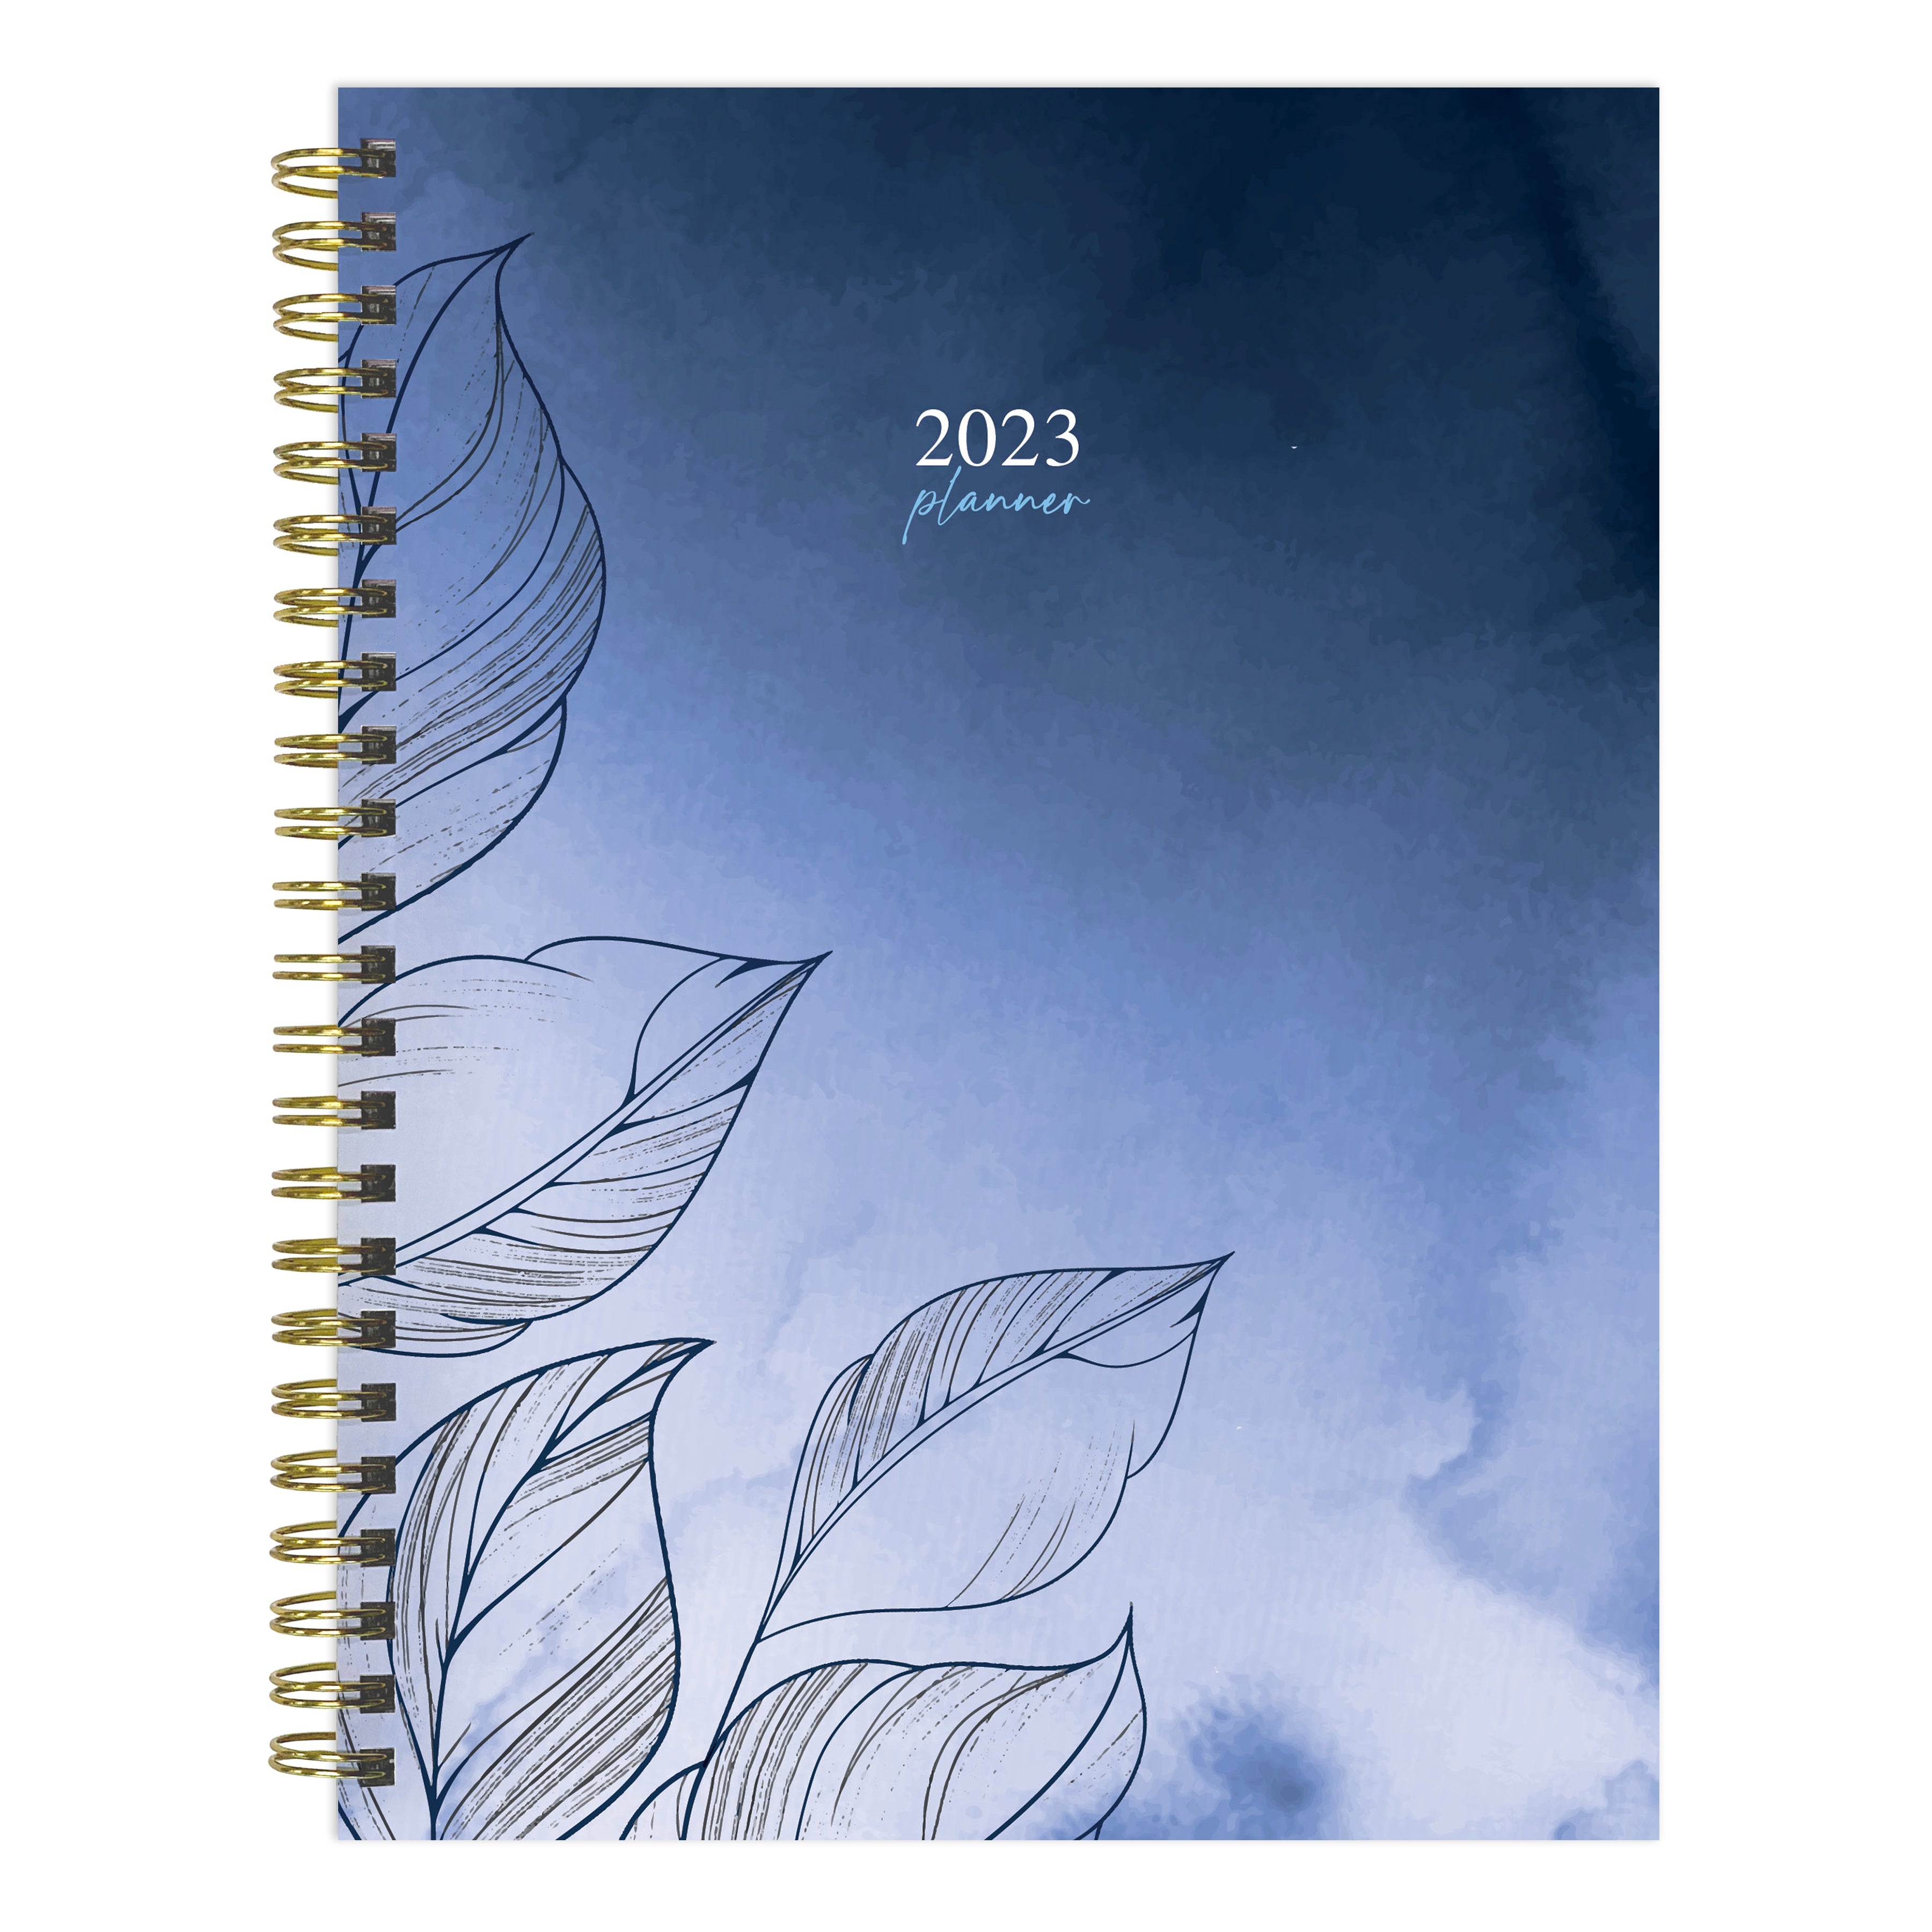 2023 Leaves - Medium Weekly, Monthly Diary/Planner